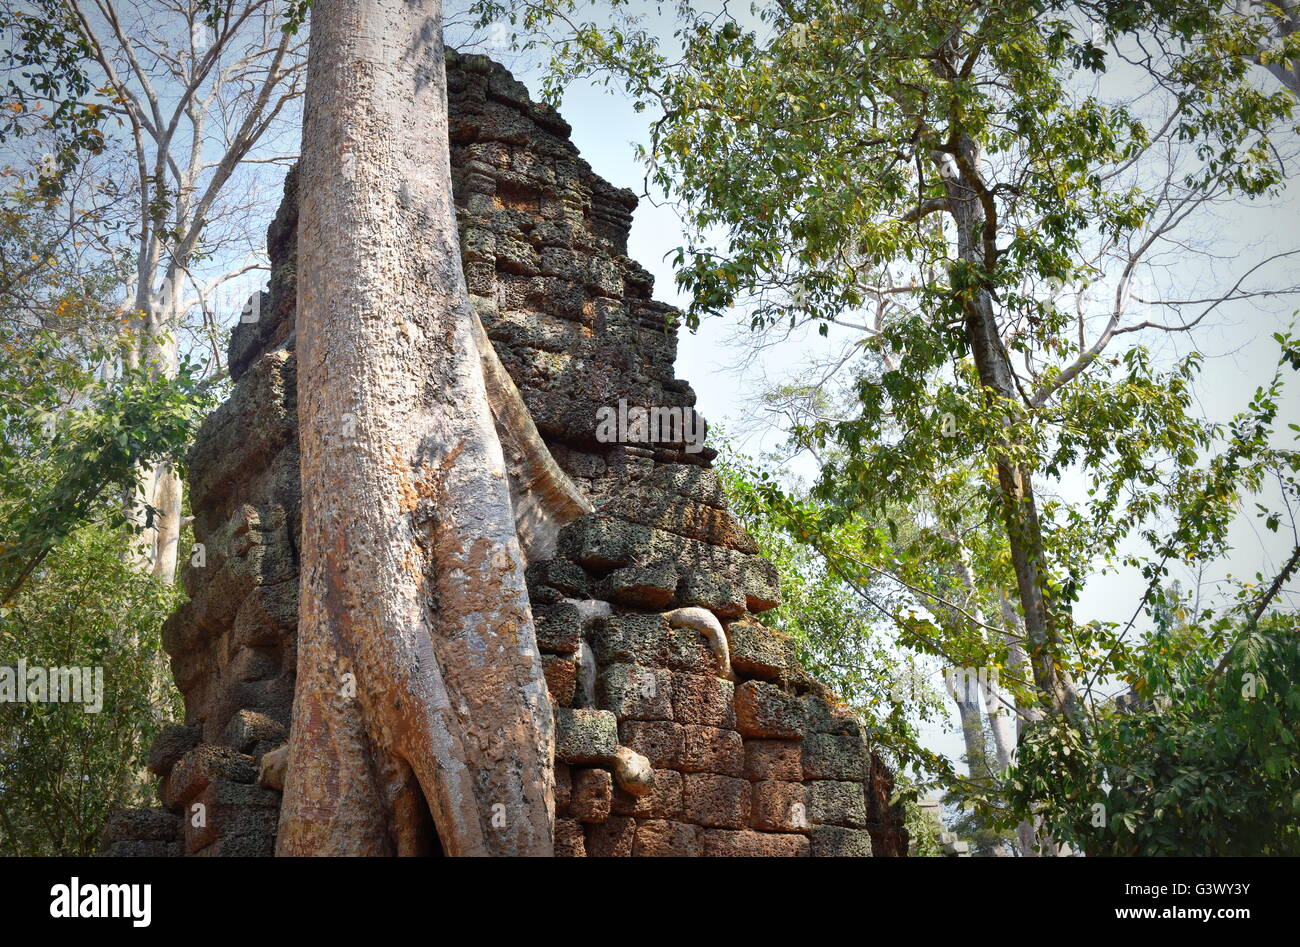 Les racines des arbres forestiers fusion avec blocs de pierre des anciennes ruines, Ta Prohm, Angkor, Cambodge Banque D'Images